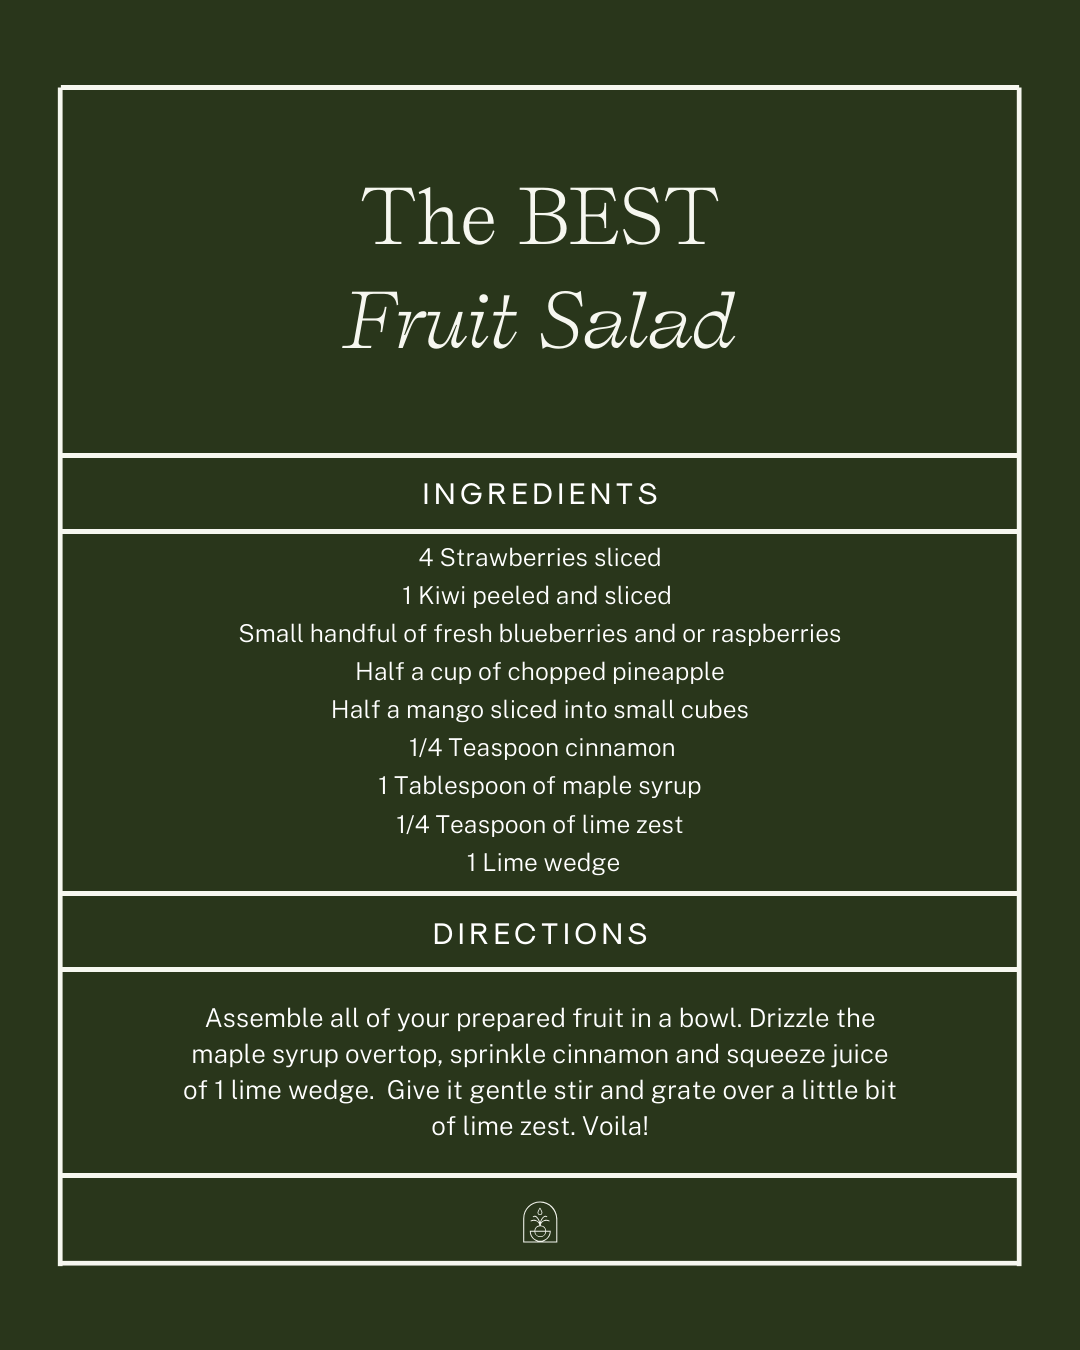 The best fruit salad recipe